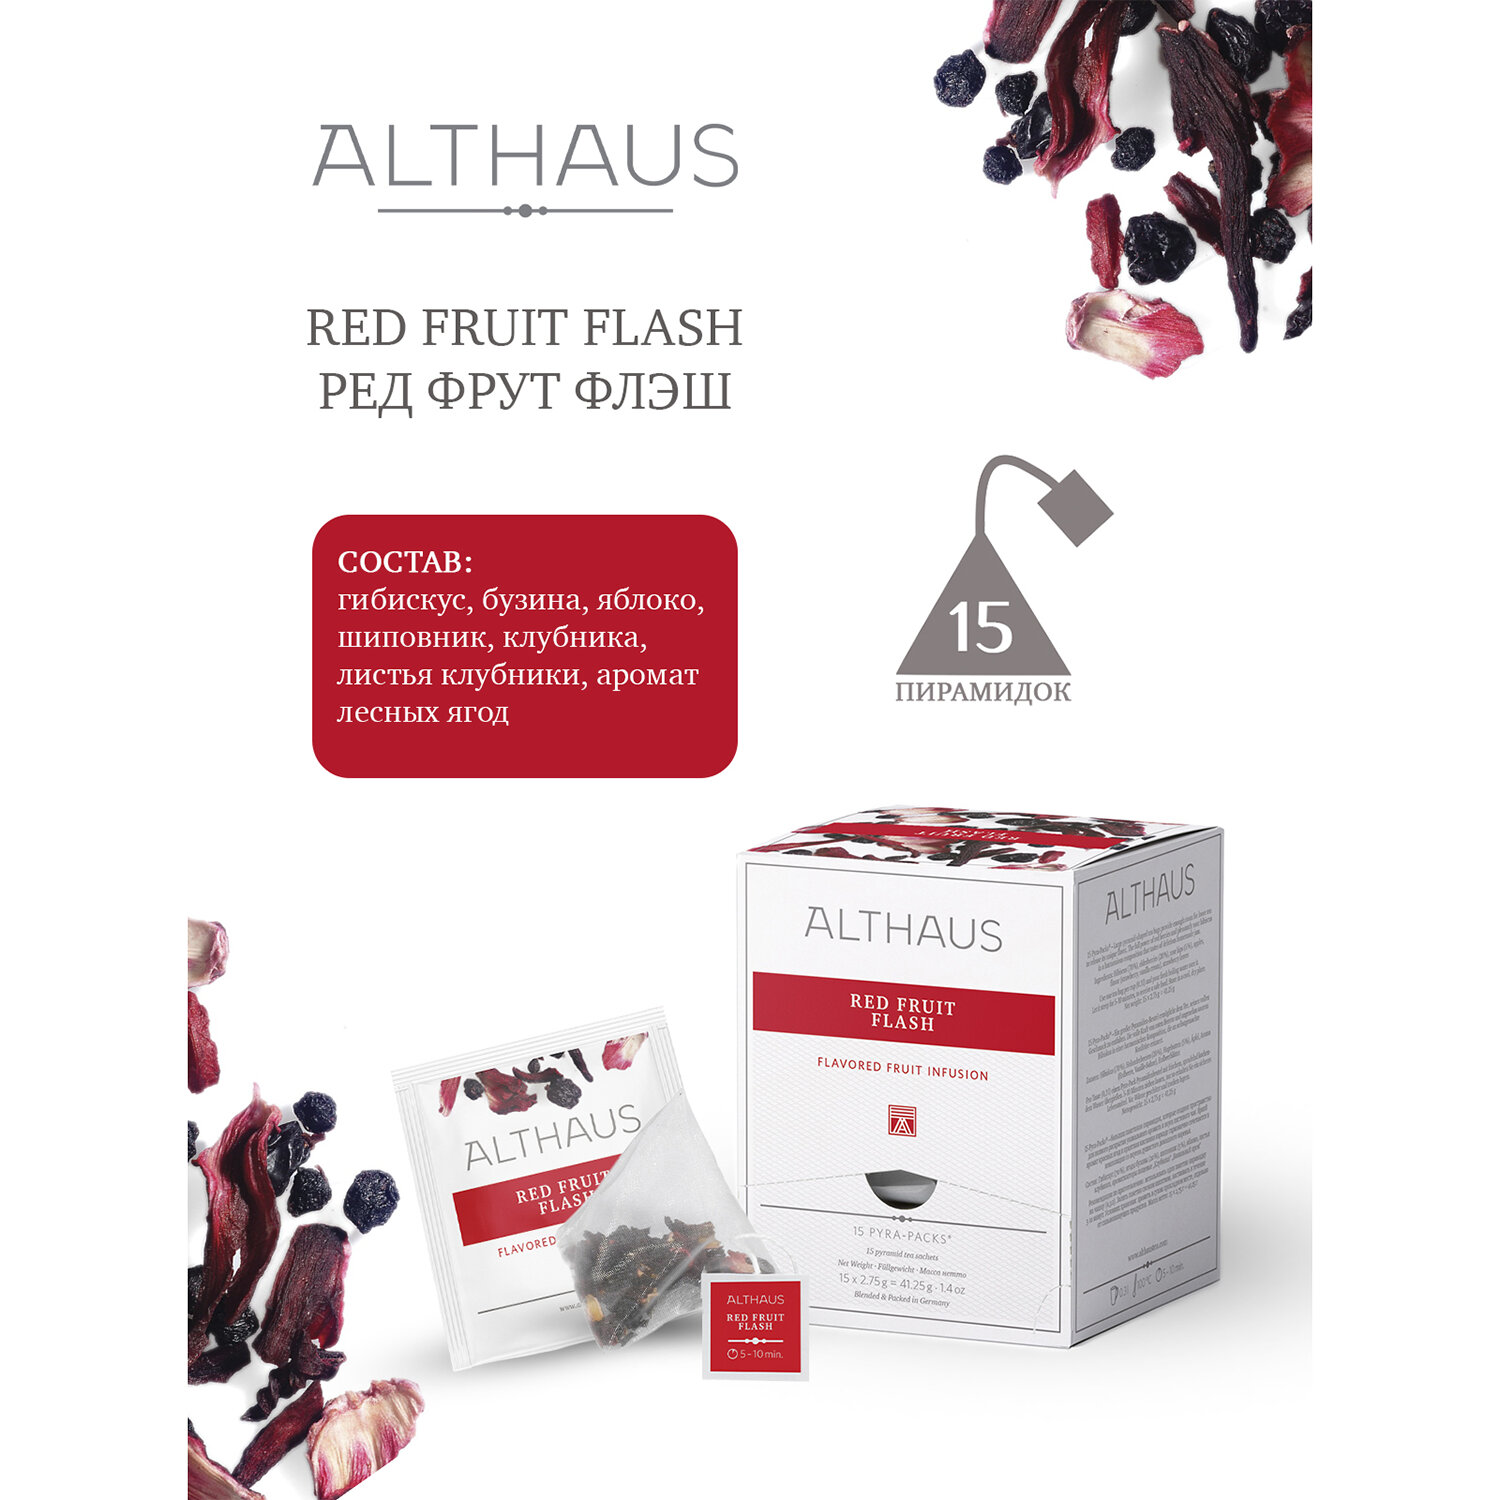  ALTHAUS TALTHL-P00010 Red Fruit Flash, , 15   2,75 